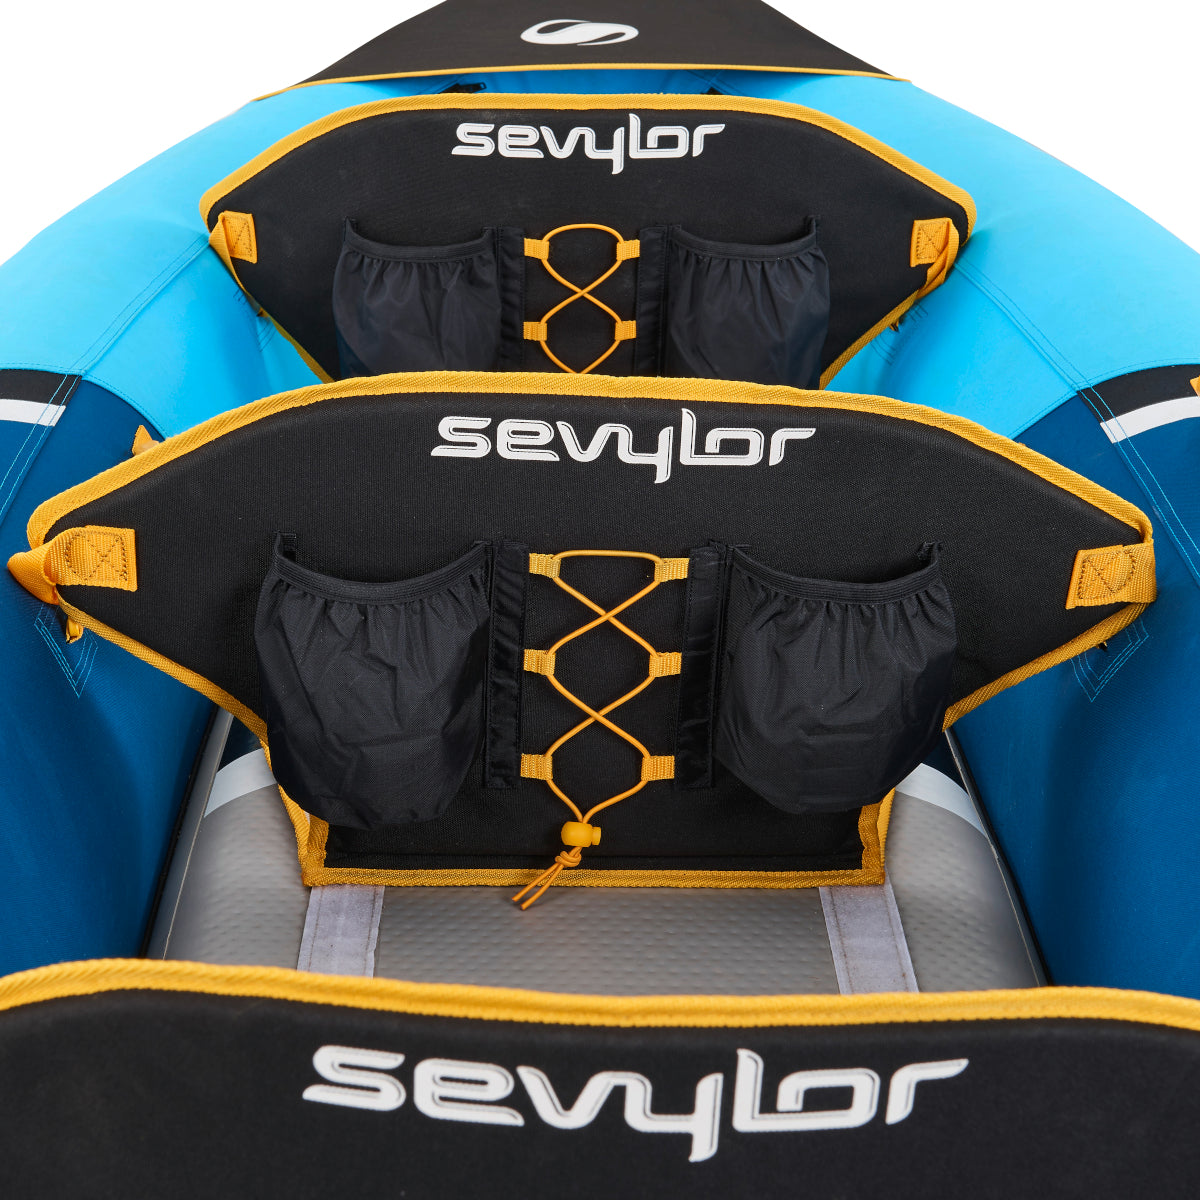 Sevylor Montreal - 2 Person + 1 Inflatable Kayak